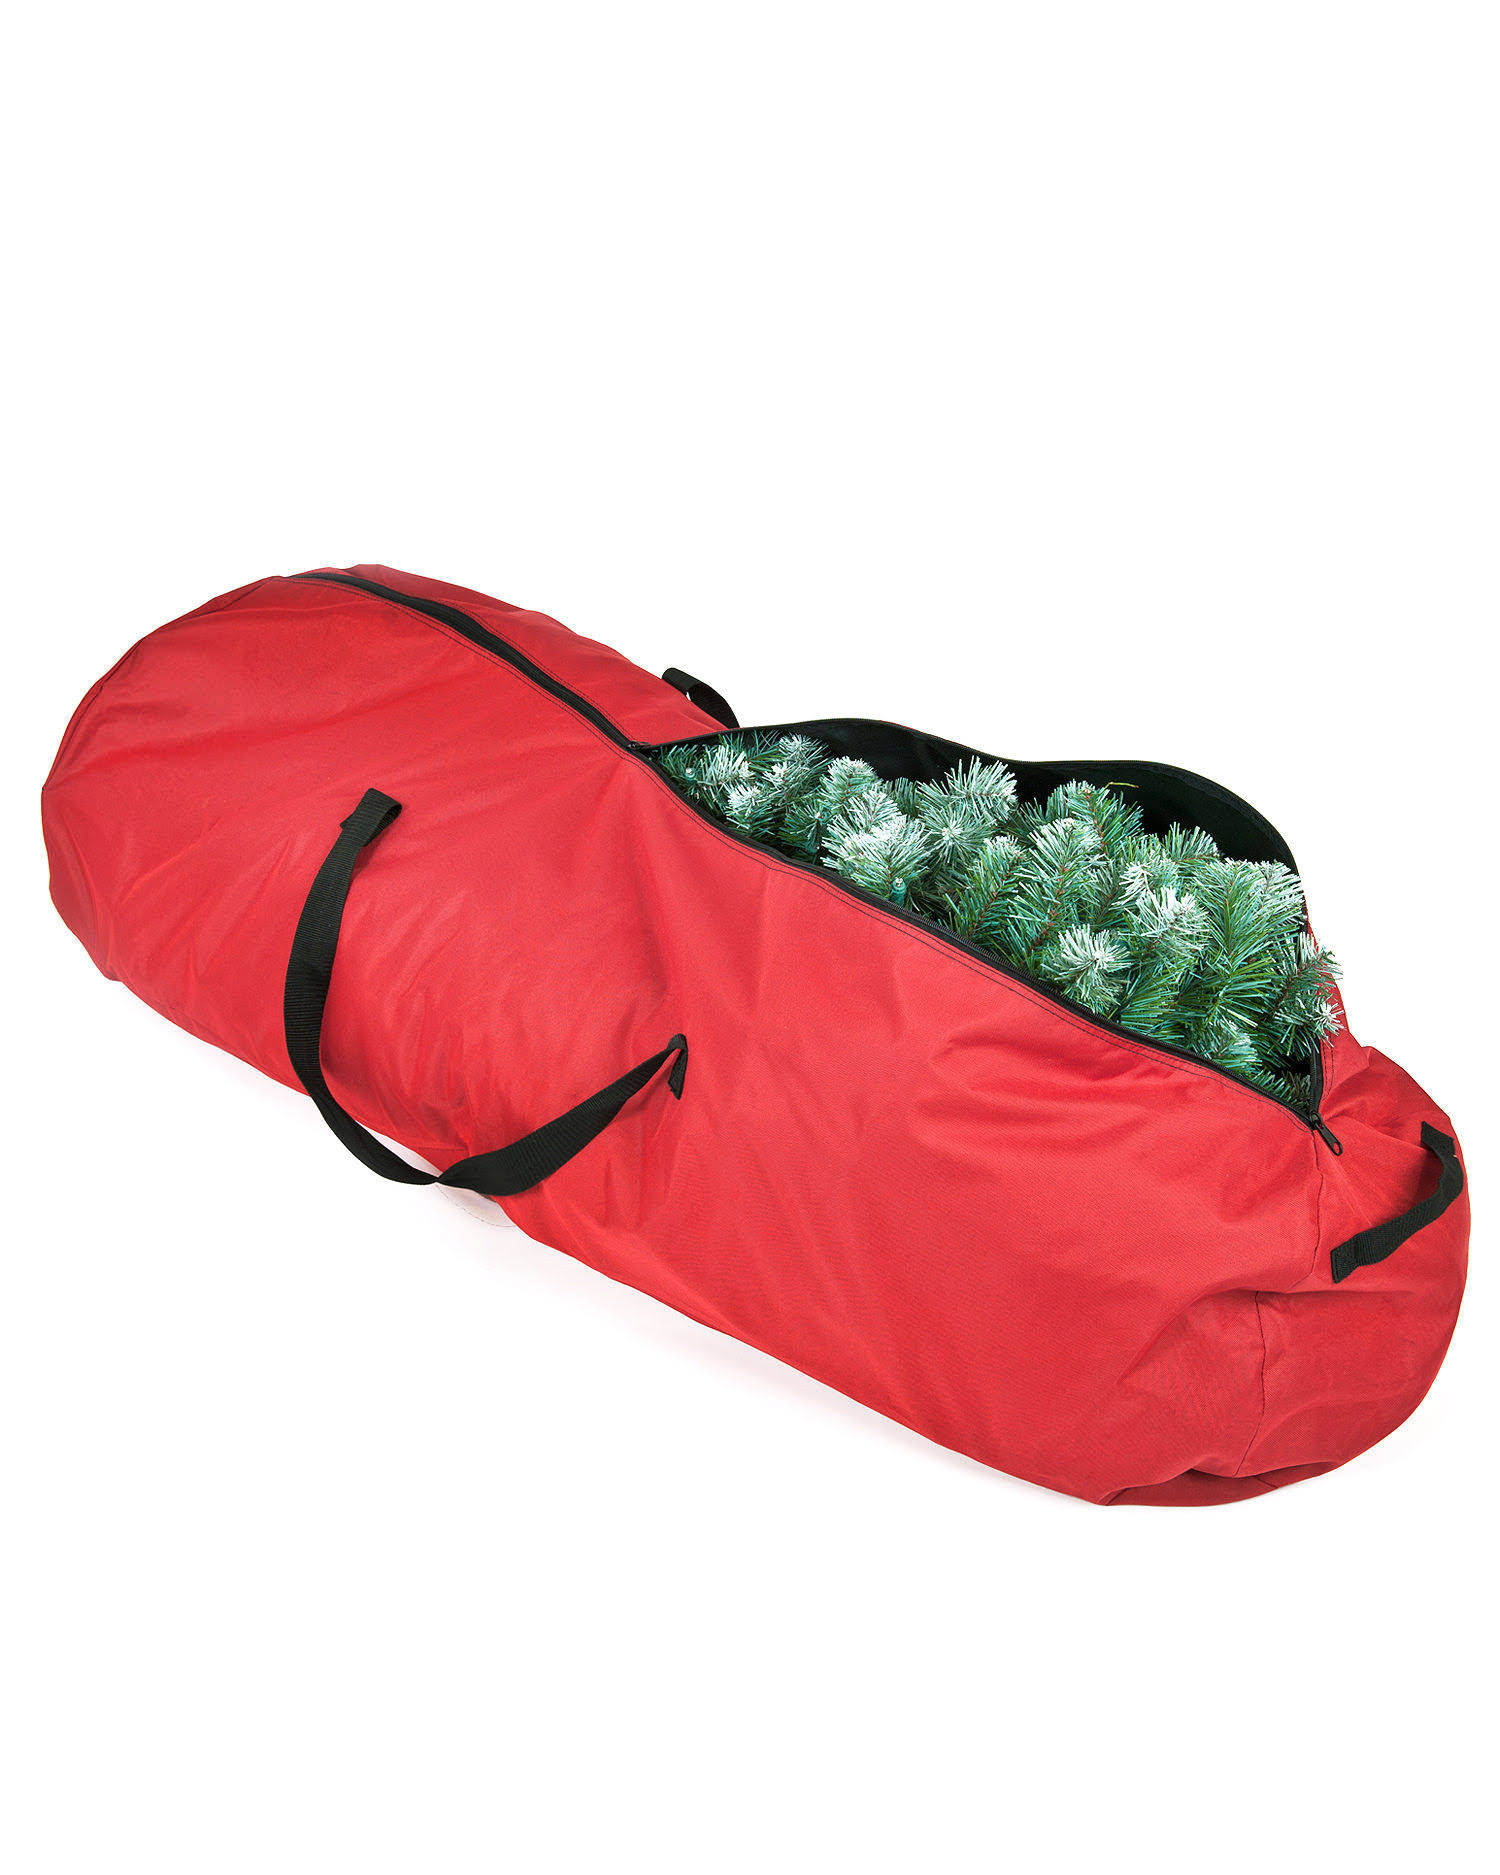 TreeKeeper Santa's Bags Premium Christmas Tree Storage Bag